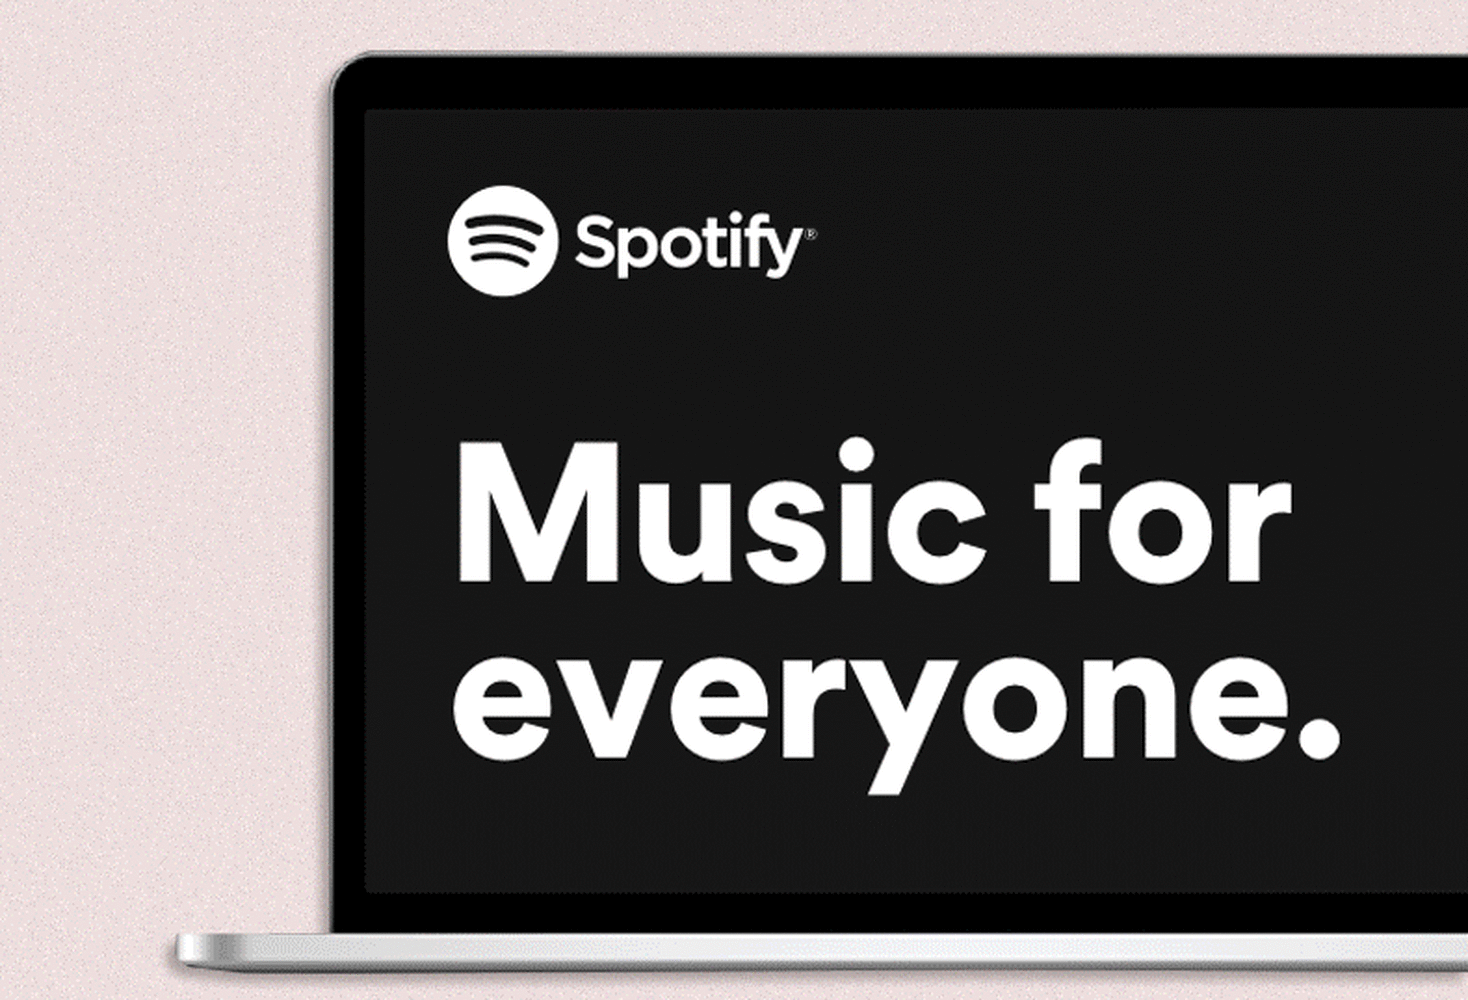 Music genre on free spotify username